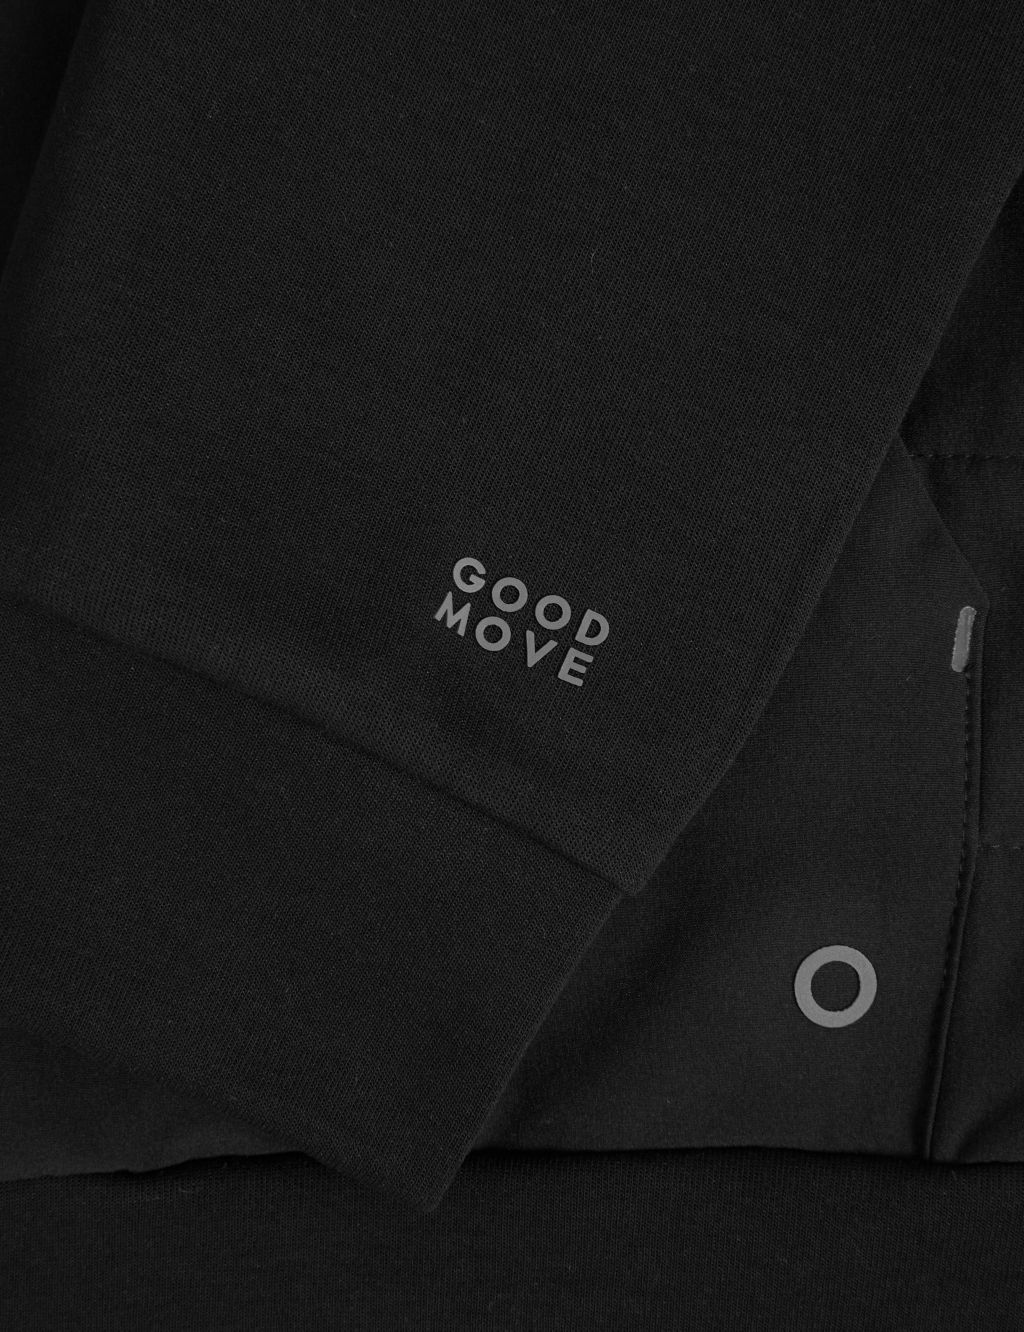 Men’s Goodmove Running Clothing | M&S